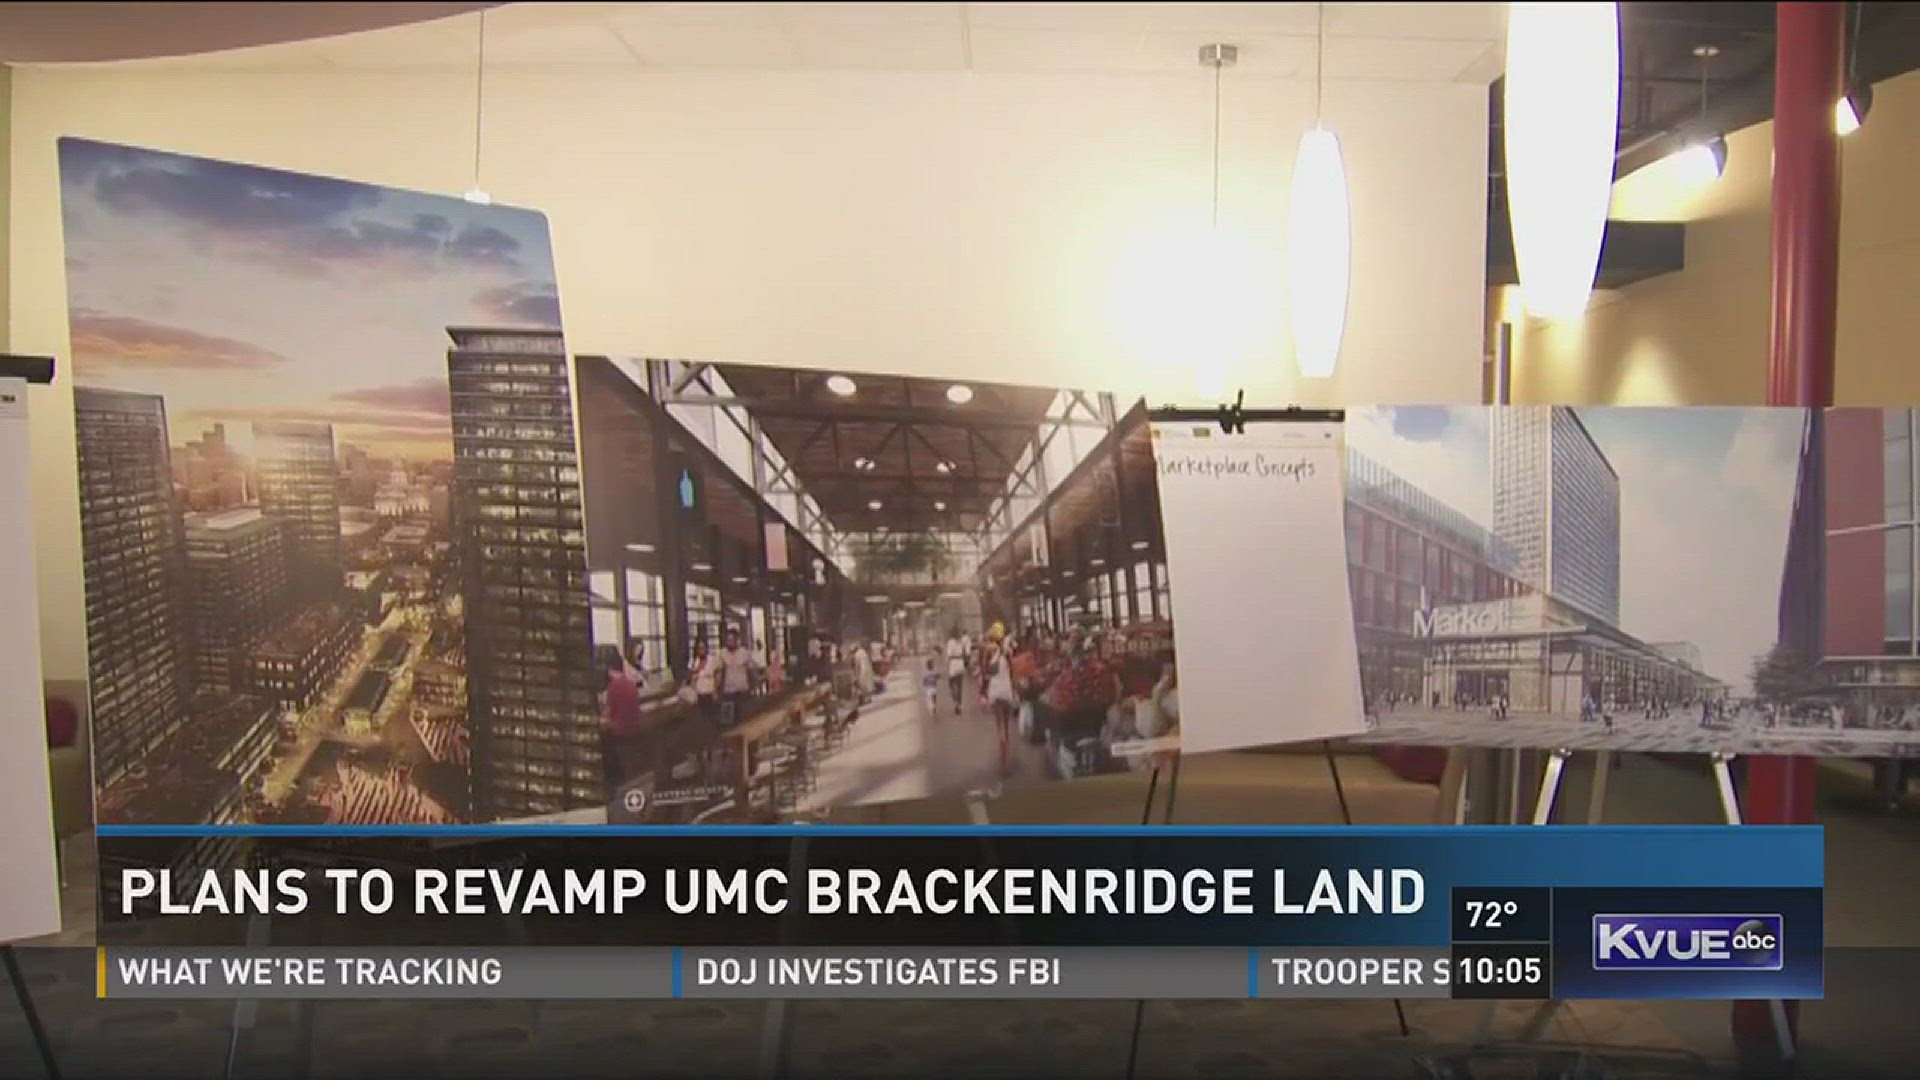 Plans to revamp UMC Brackenridge land